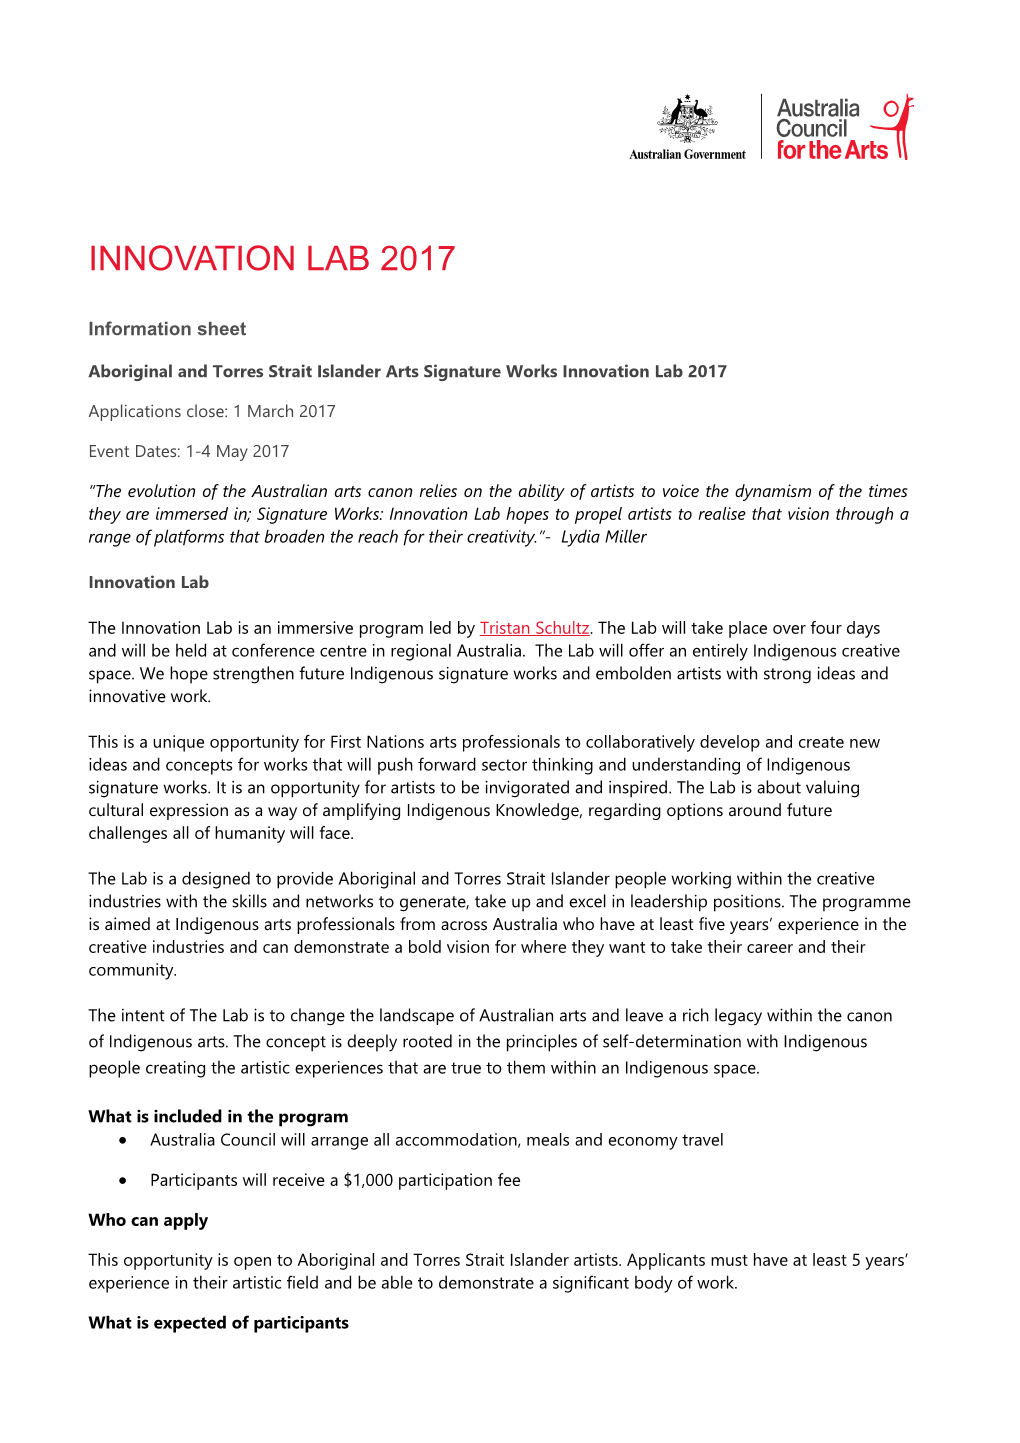 Aboriginal and Torres Strait Islander Arts Signature Works Innovation Lab 2017